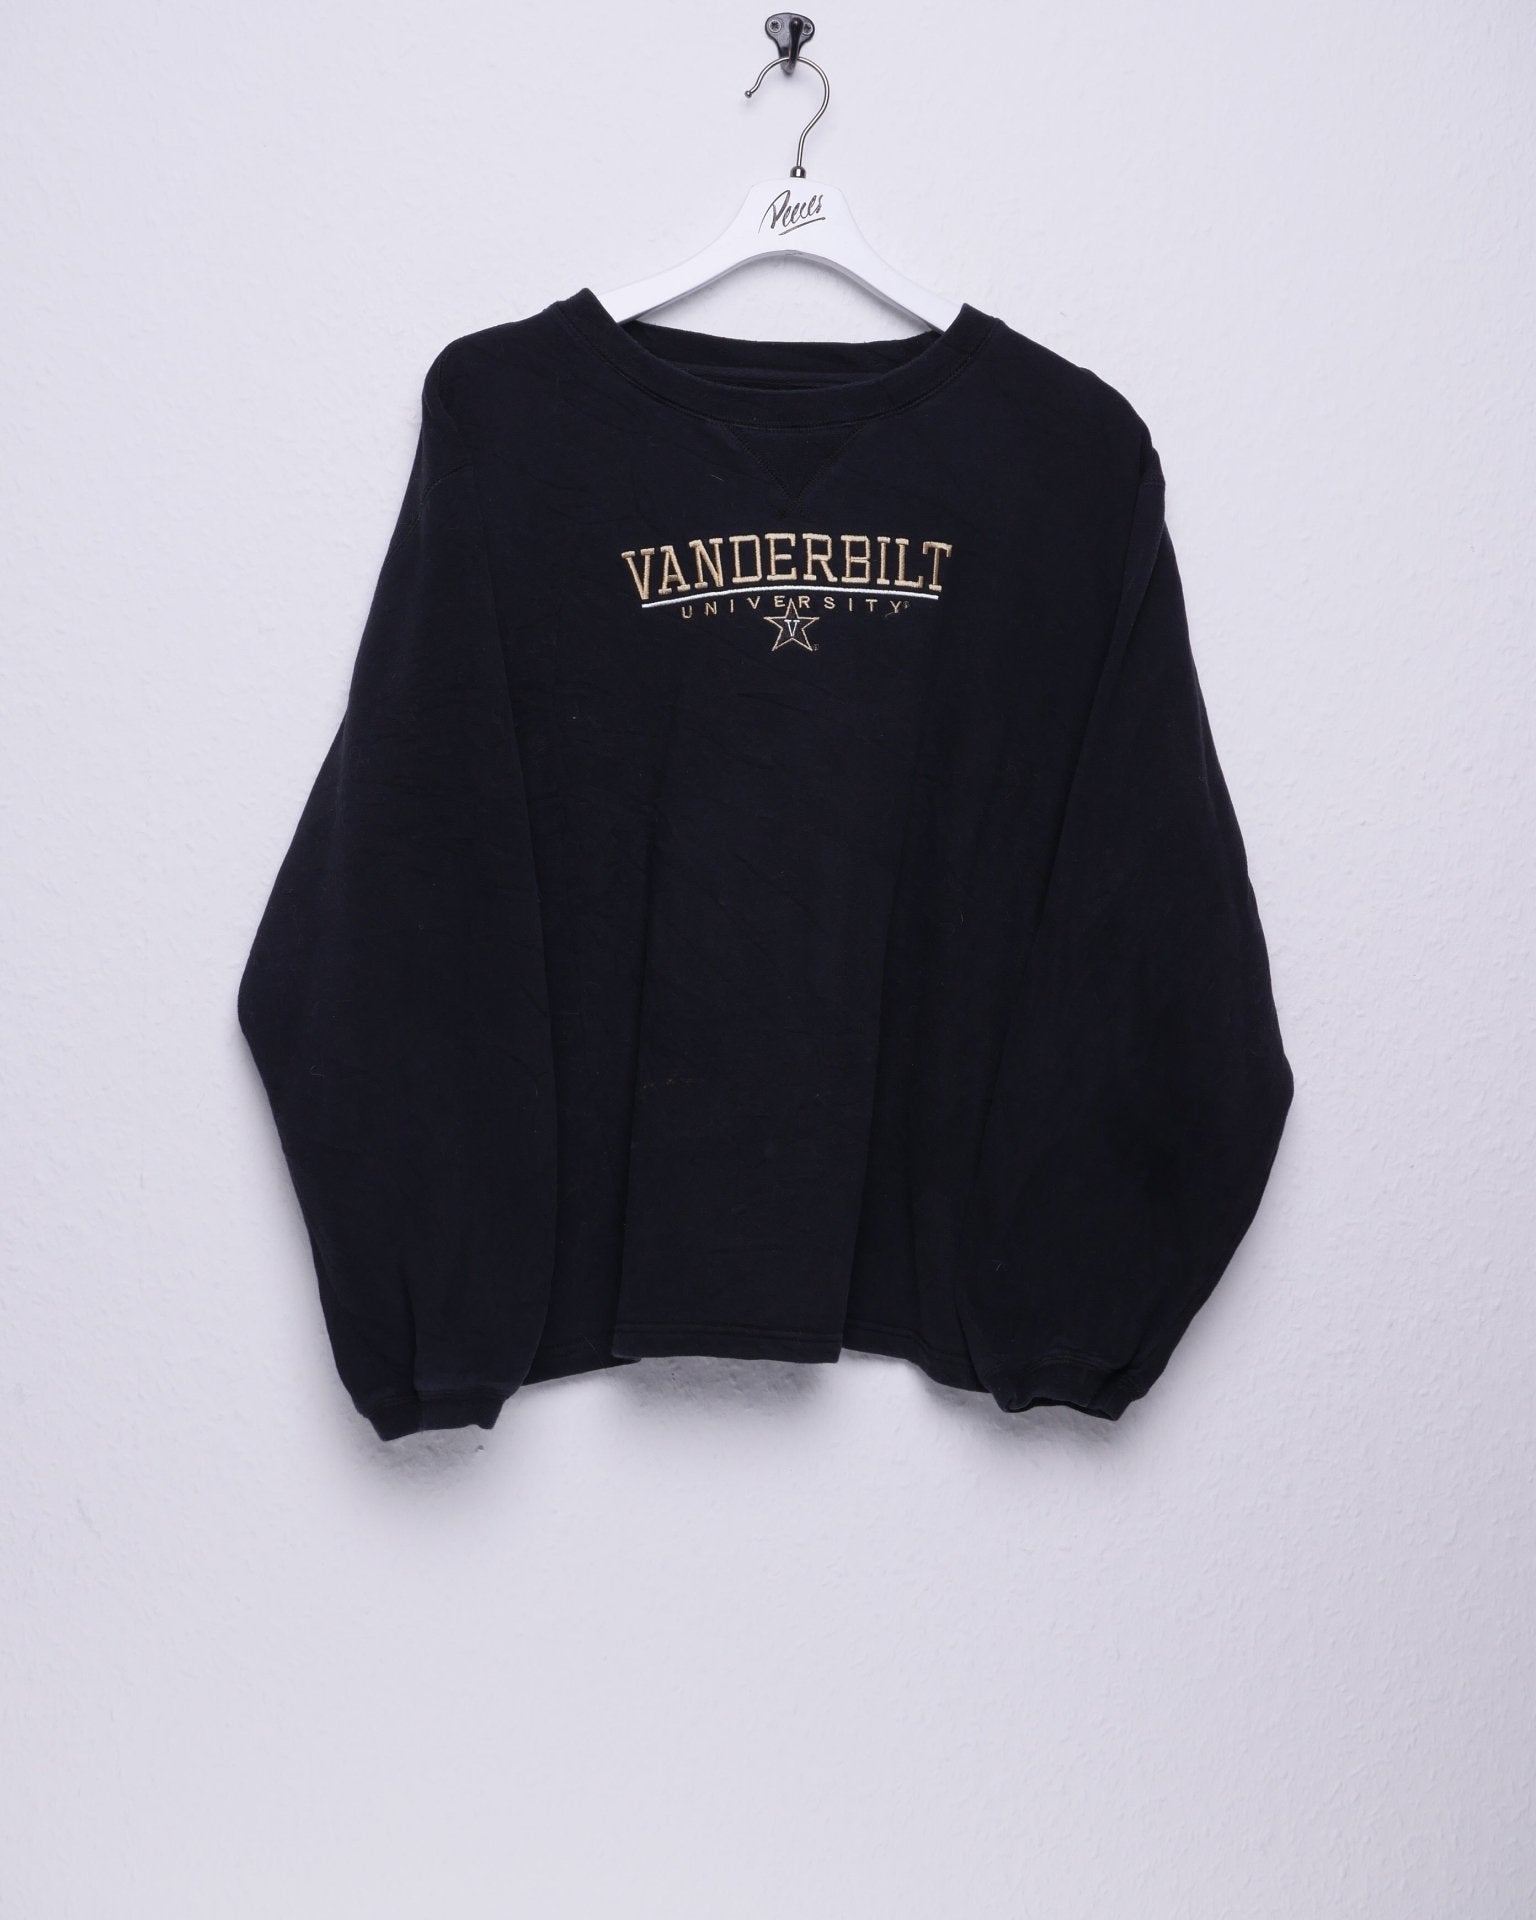 jansport Vanderbilt embroidered Spellout Vintage Sweater - Peeces